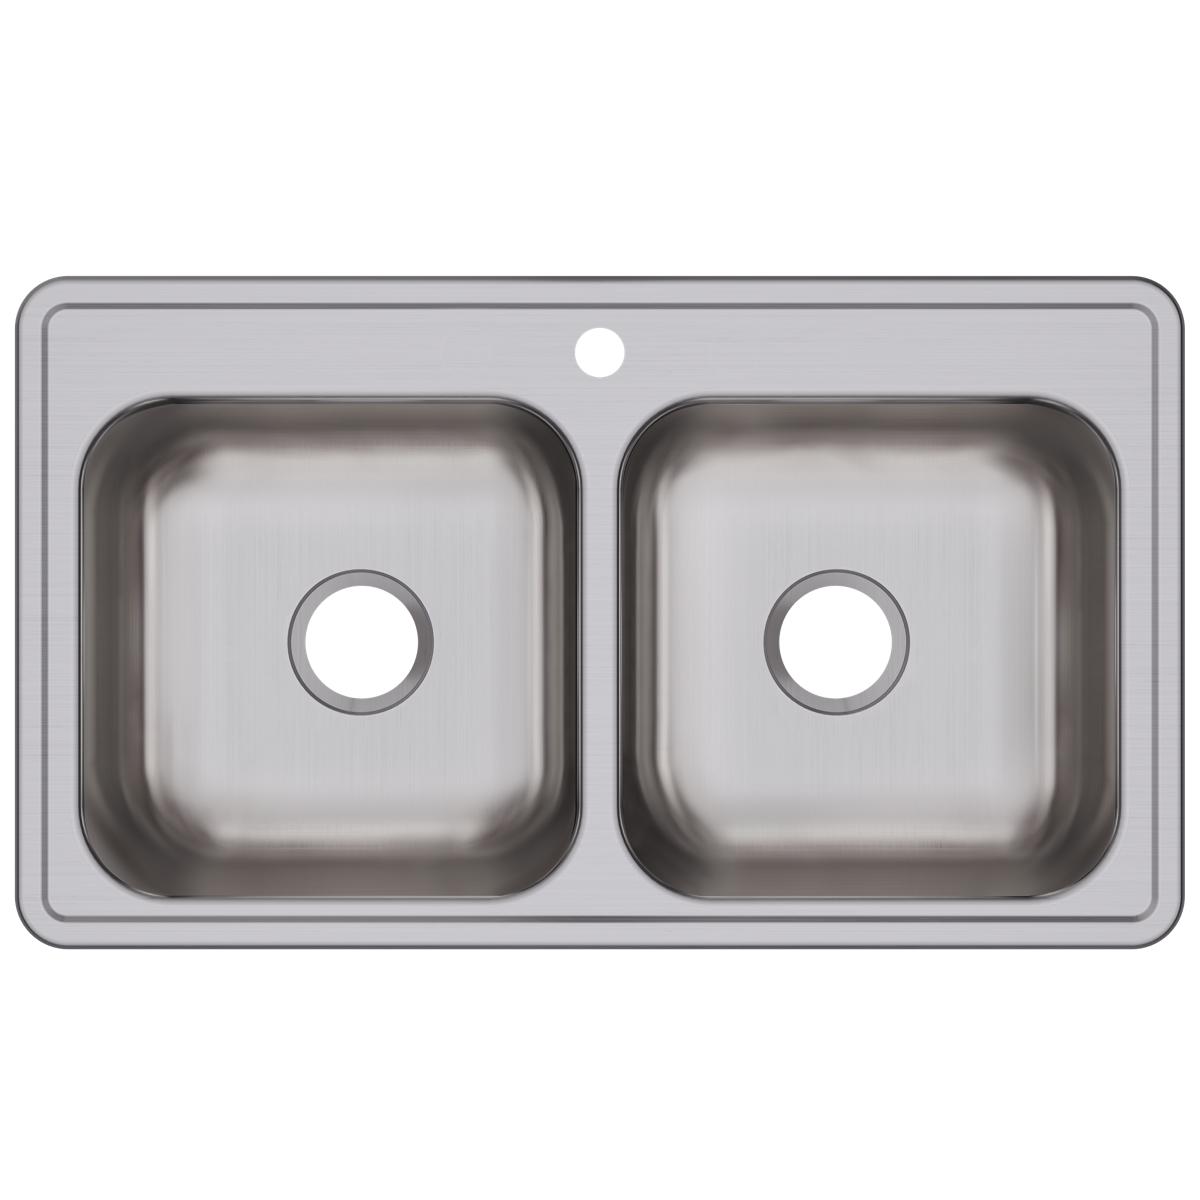 Elkay Dayton Stainless Steel 33" x 19" x 8" Equal Double Bowl Drop-in Sink